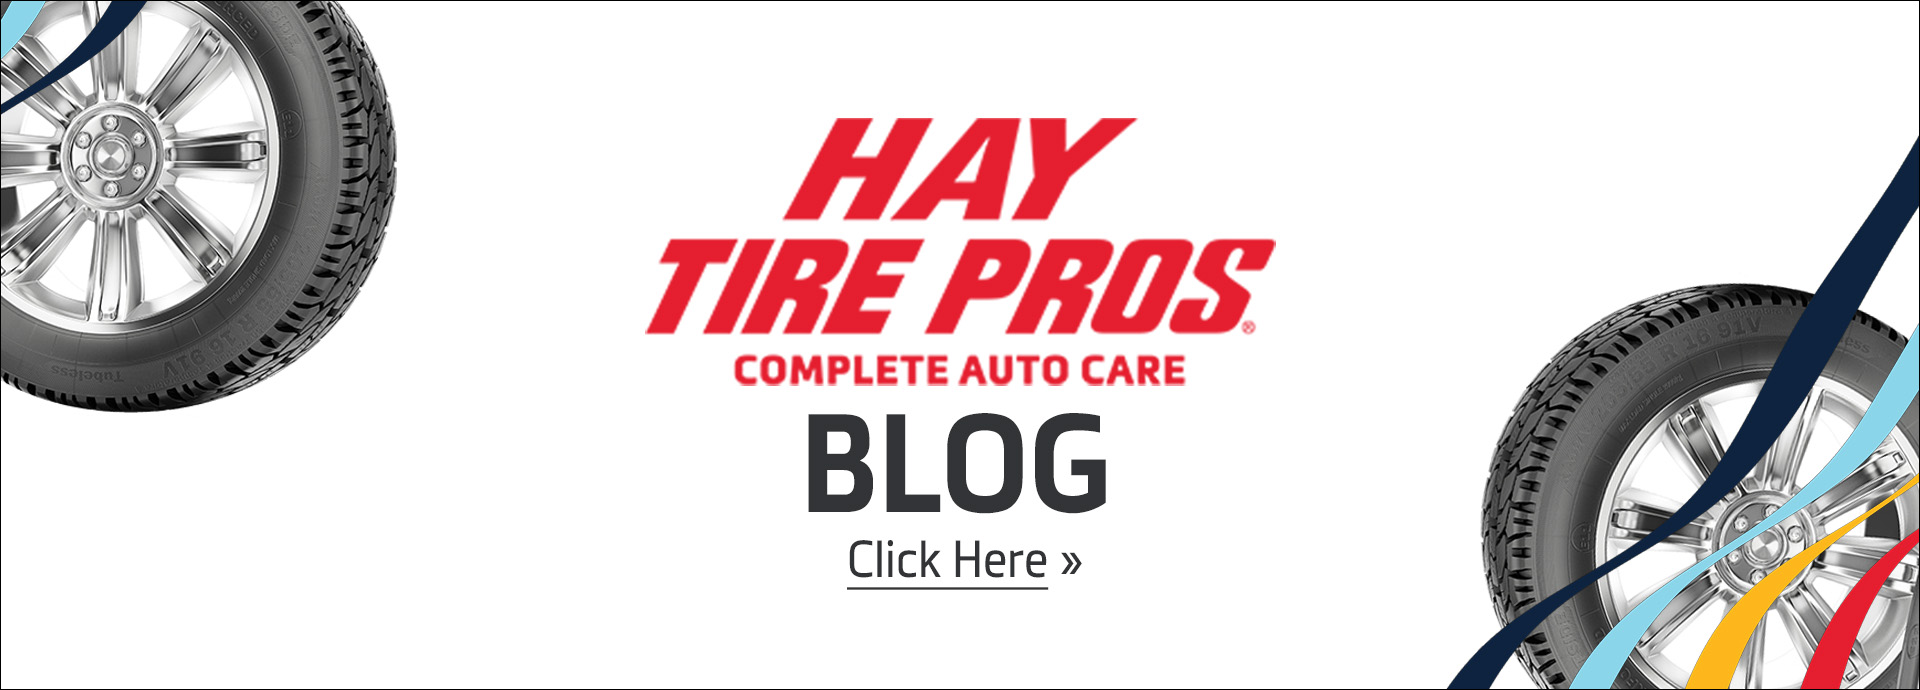 Hay Tire Pros Blog